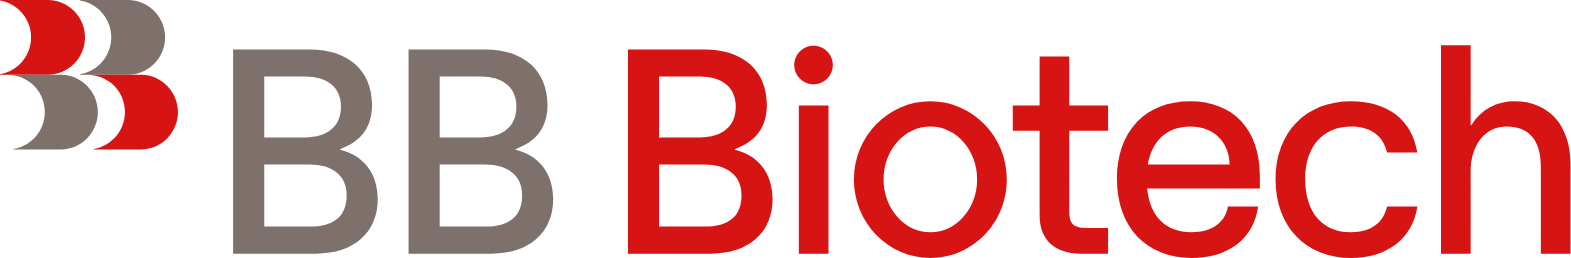 BB Biotech
 logo large (transparent PNG)